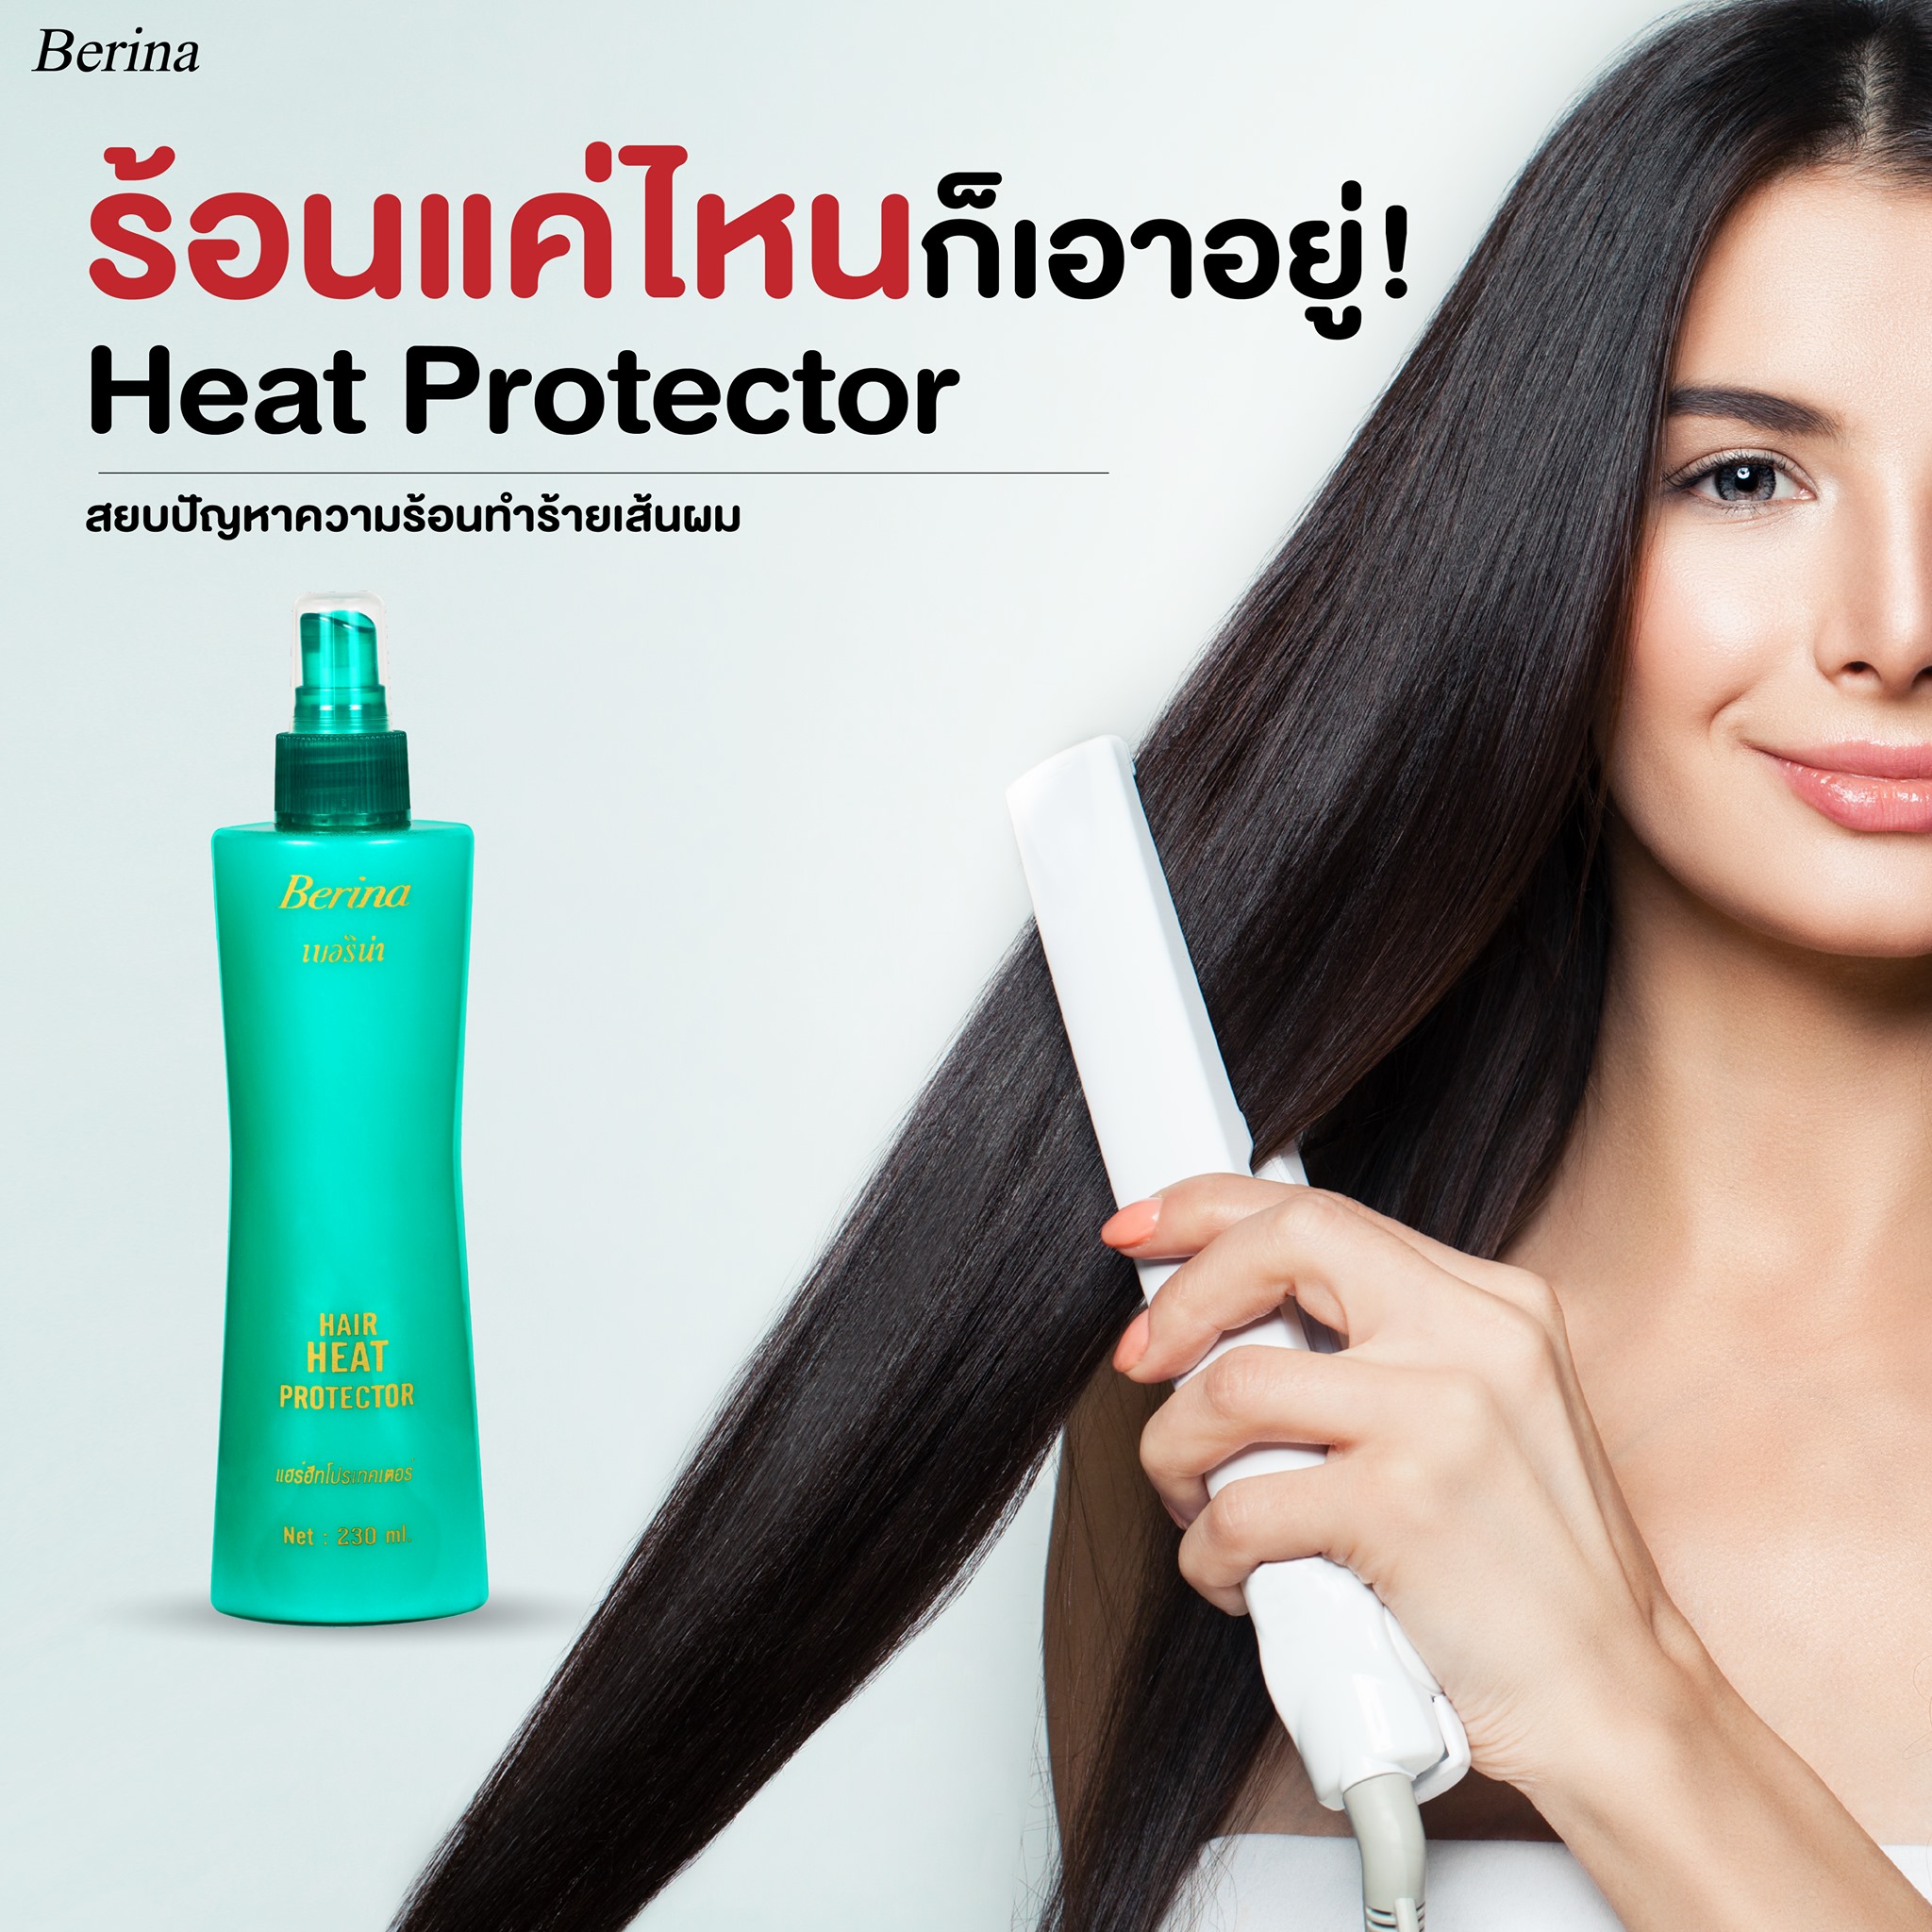 Berina Hair Heat Protector Spray 230ml. เบอริน่า สเปรย์น้ำนม กันความร้อน  ปกป้องเส้นผม 